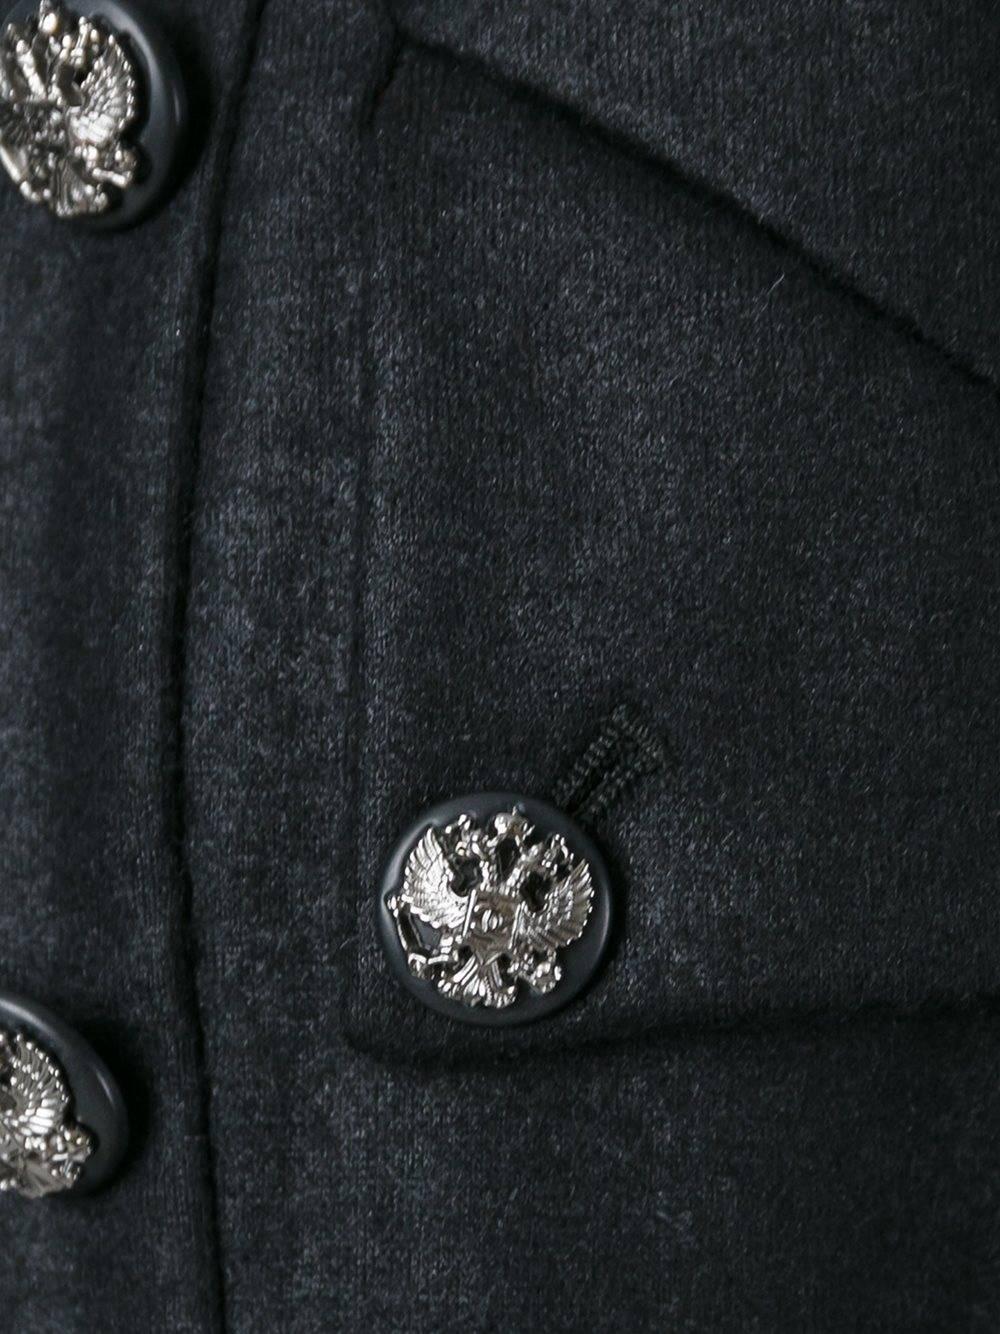 Chanel black silk and wool blend funnel neck jacket.

Colour: Black

Material: Silk 100% / Wool 50% / Viscose 48% / Polyamide 2%

Size: FR 38

Measurements: waist: 80 centimetres, bust: 94 centimetres, shoulder: 40 centimetres, sleeve